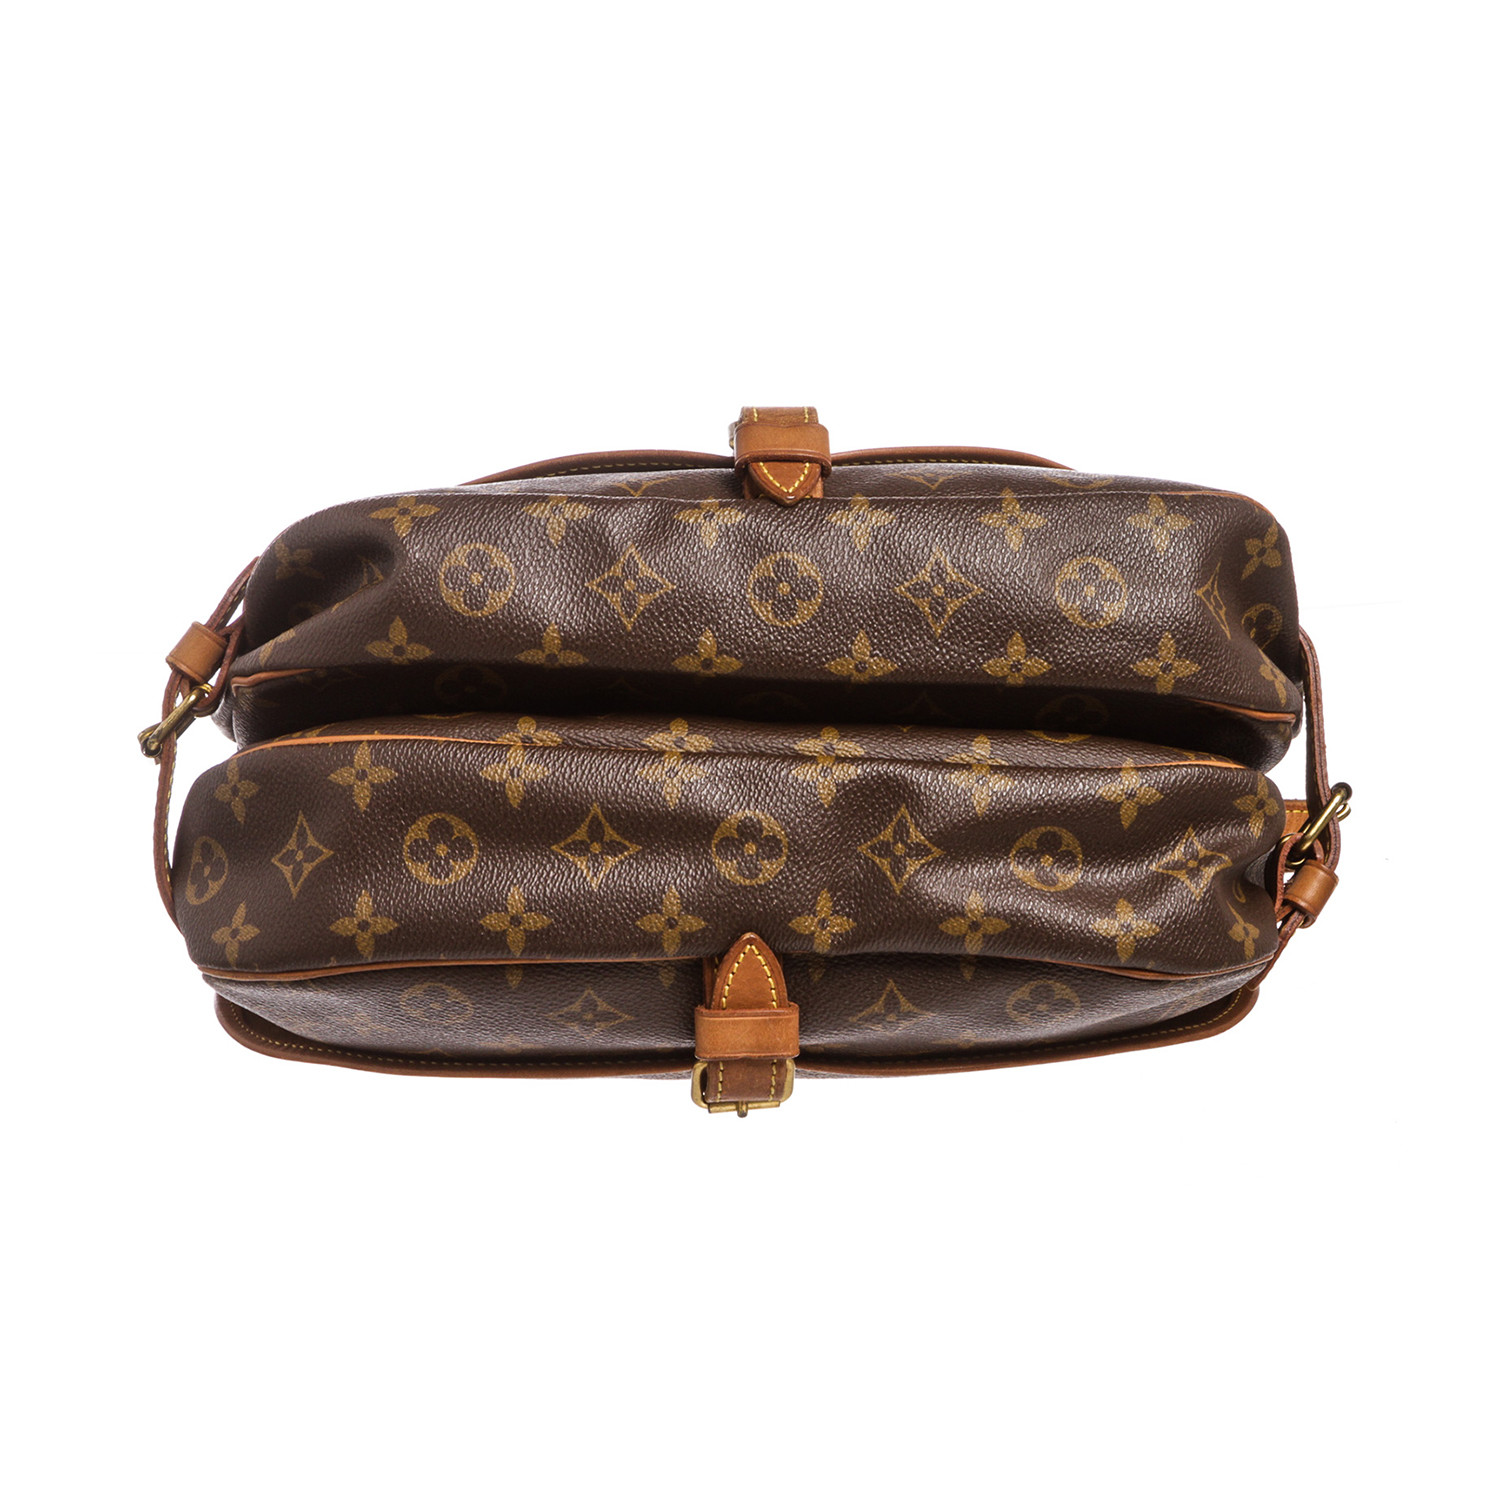 Louis Vuitton M45911 SAUMUR MESSENGER Bag for Sale in Beltsville